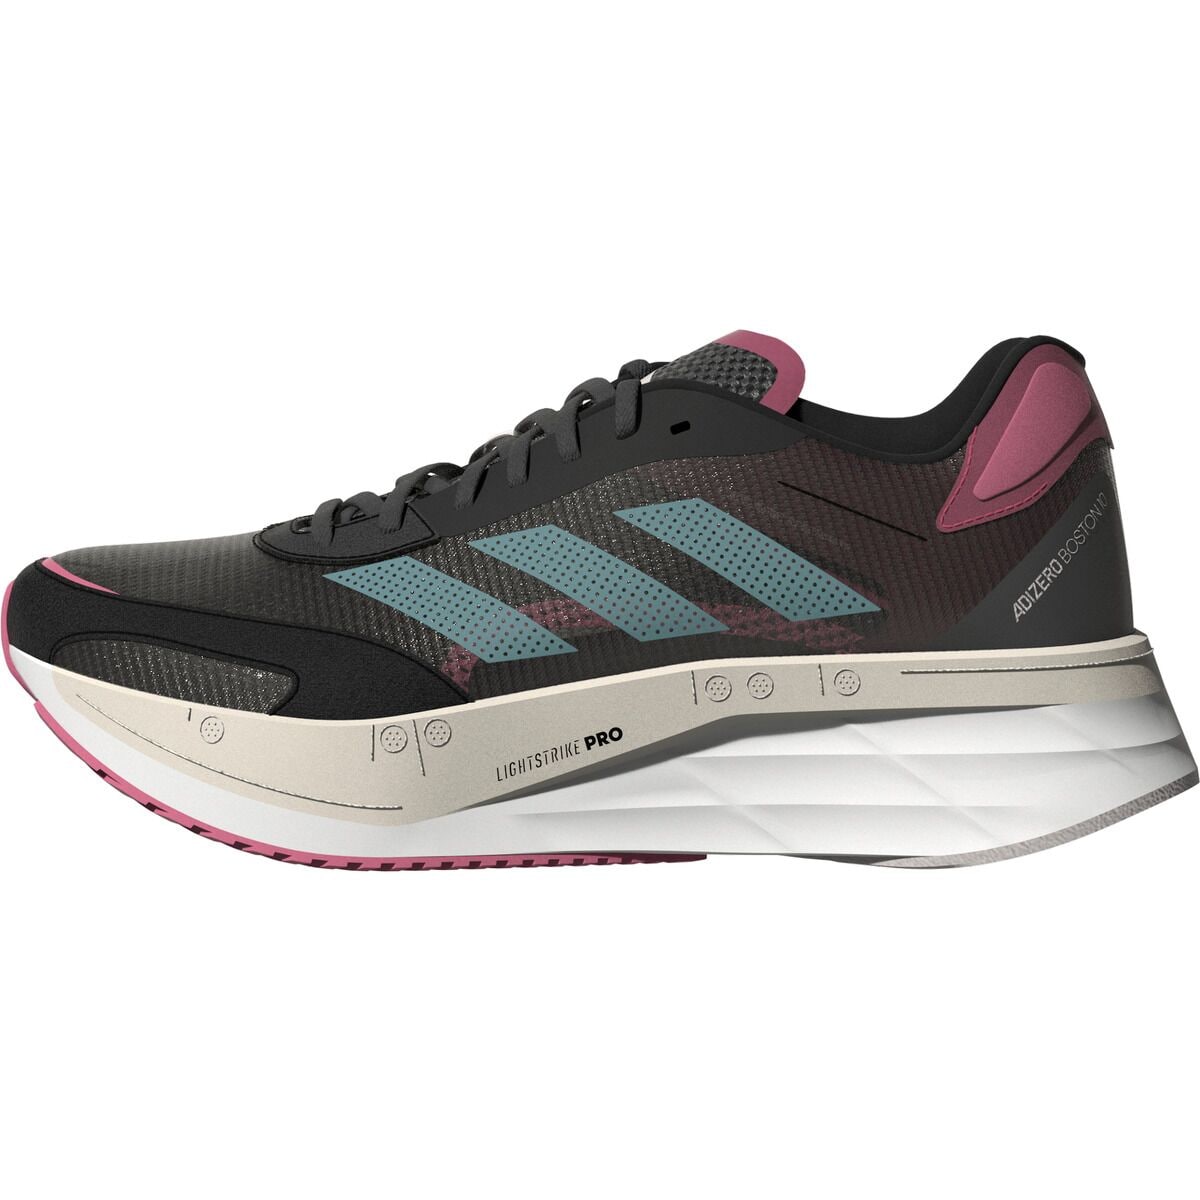 Adidas Adizero Boston 10 Running Shoe - Women's - Footwear